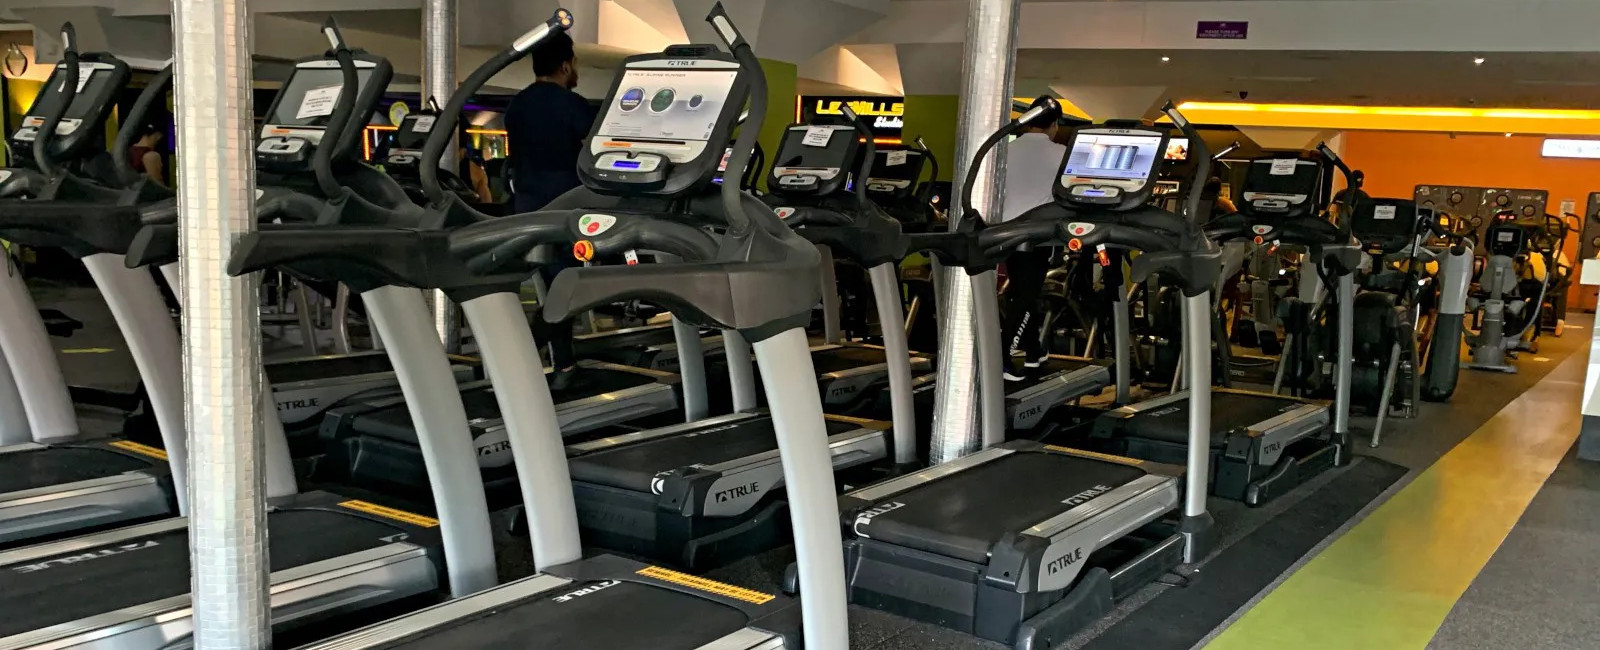 treadmills at gym in aston quay